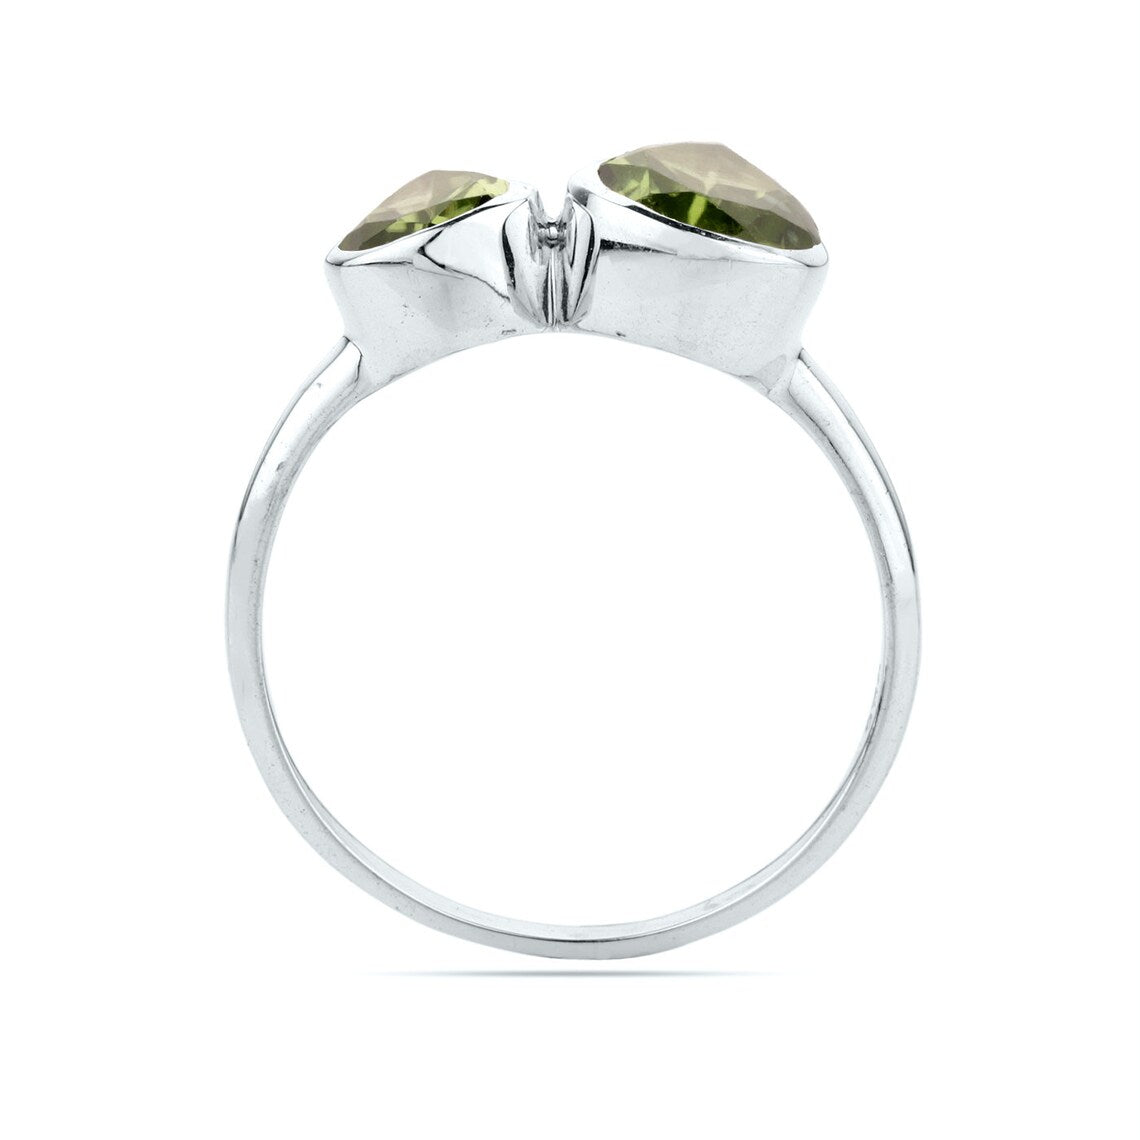 Beautiful Peridot 925 Sterling Silver Ring - Pear Cut - Handmade - Dainty Ring